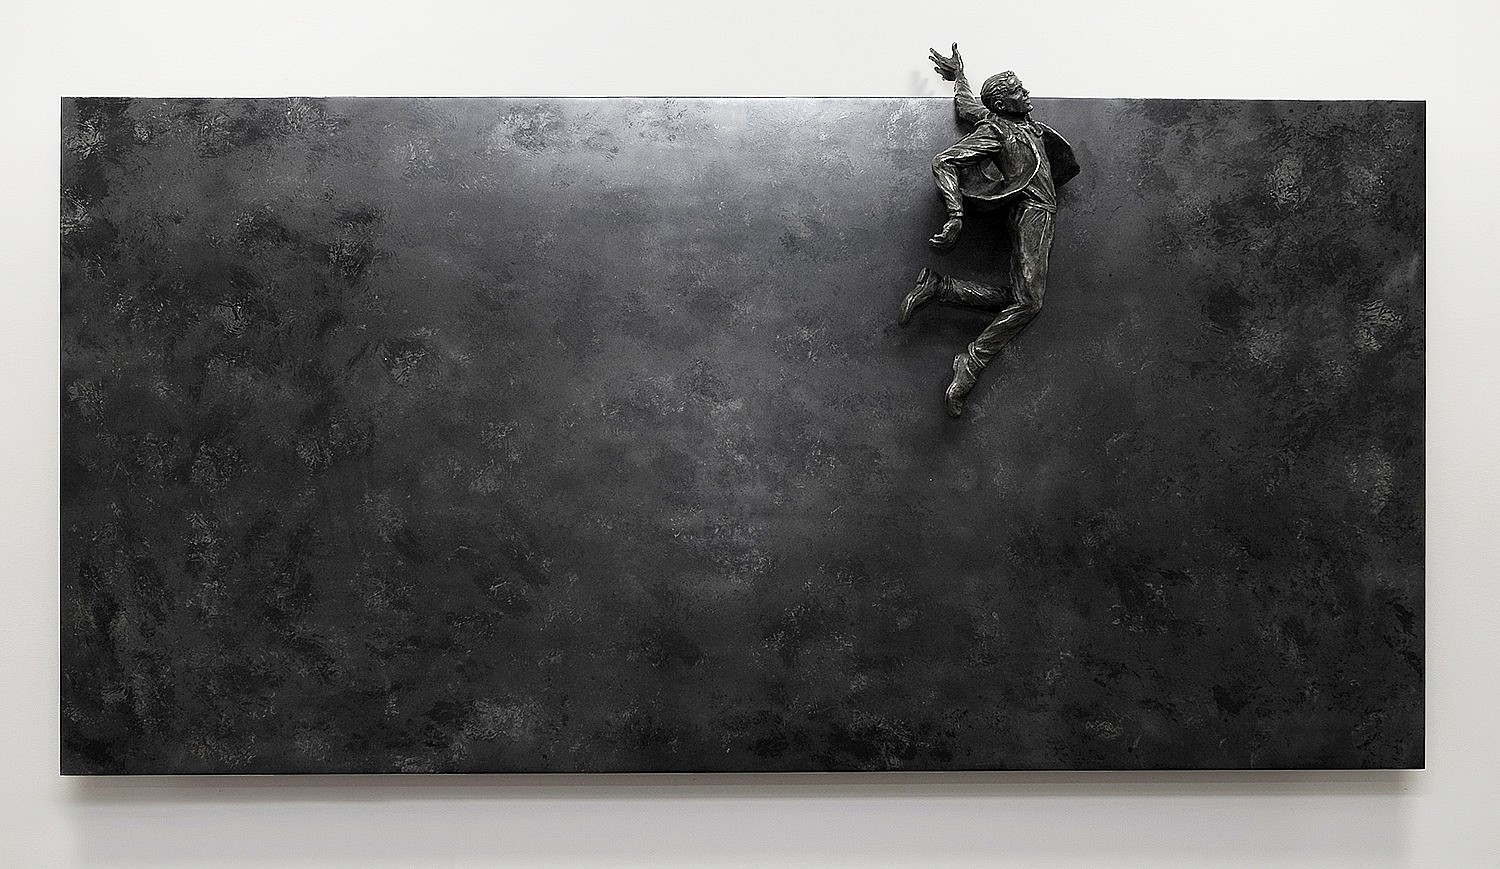 Jim Rennert, Leap of Faith, 2009
Bronze and steel, 38 x 60 x 15 in. Ed of 9
RENN00014